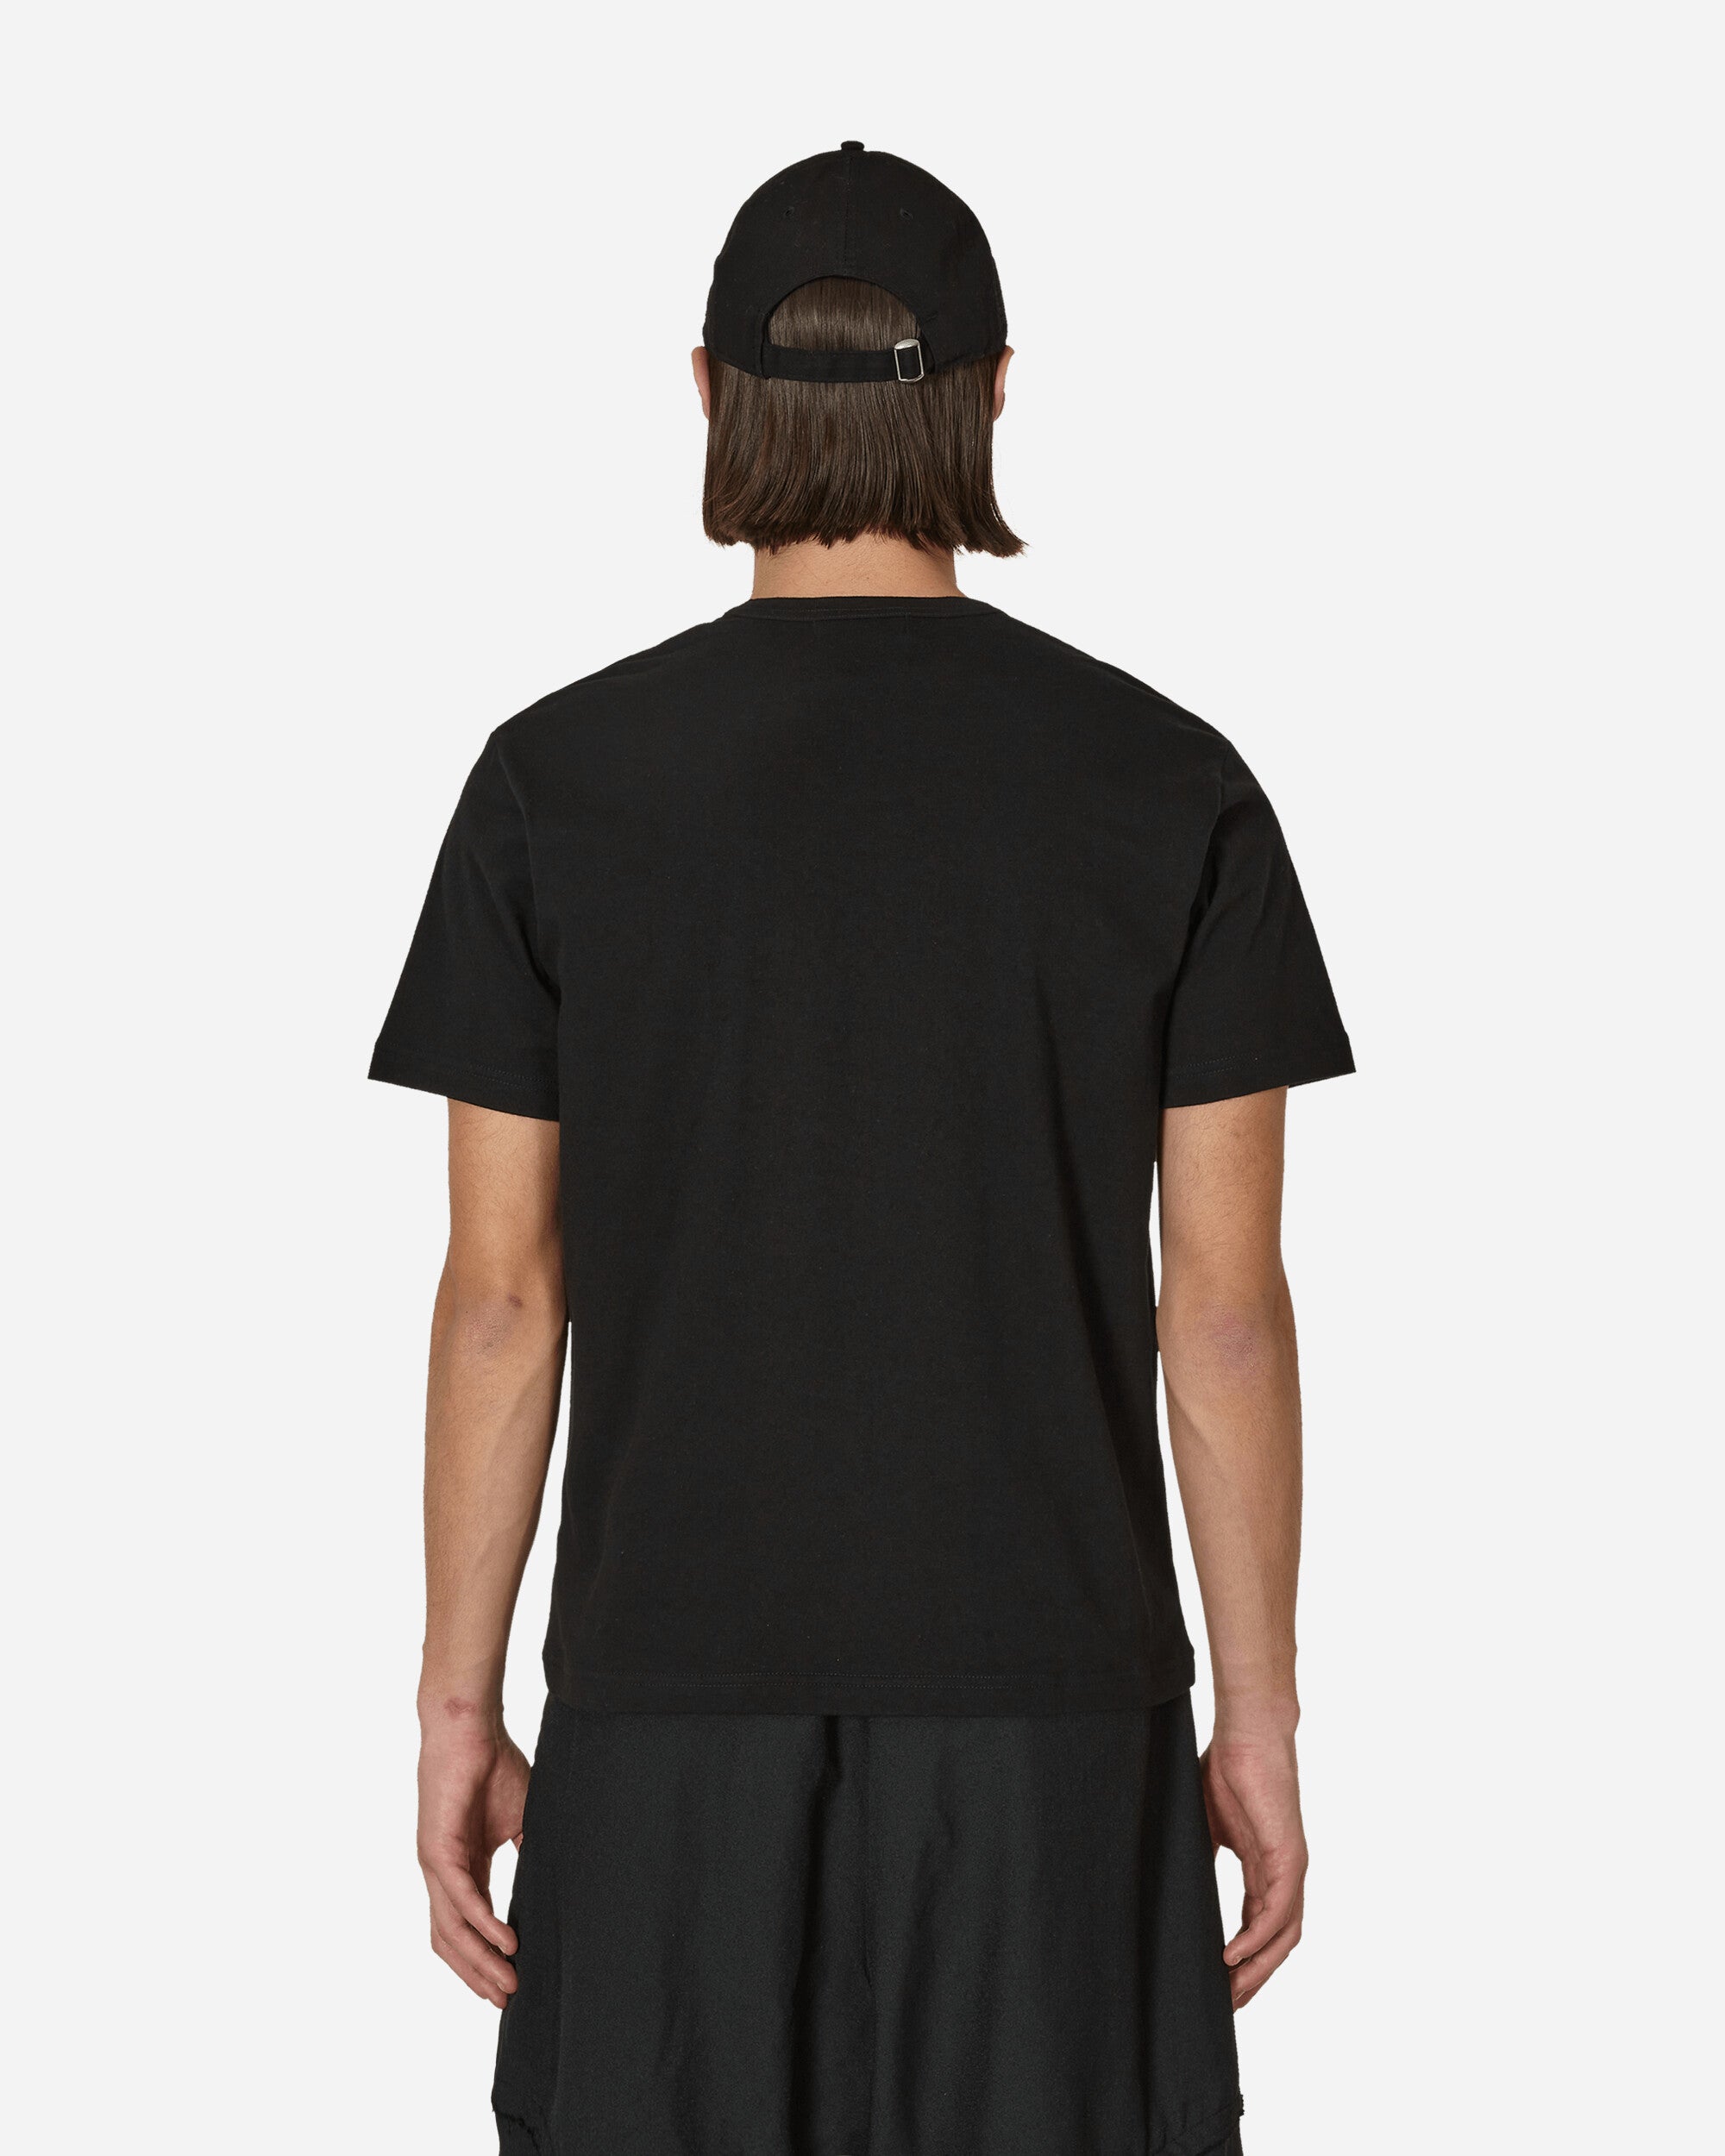 Comme Des Garçons Black T-Shirt Black/White T-Shirts Shortsleeve 1K-T107-S23 1